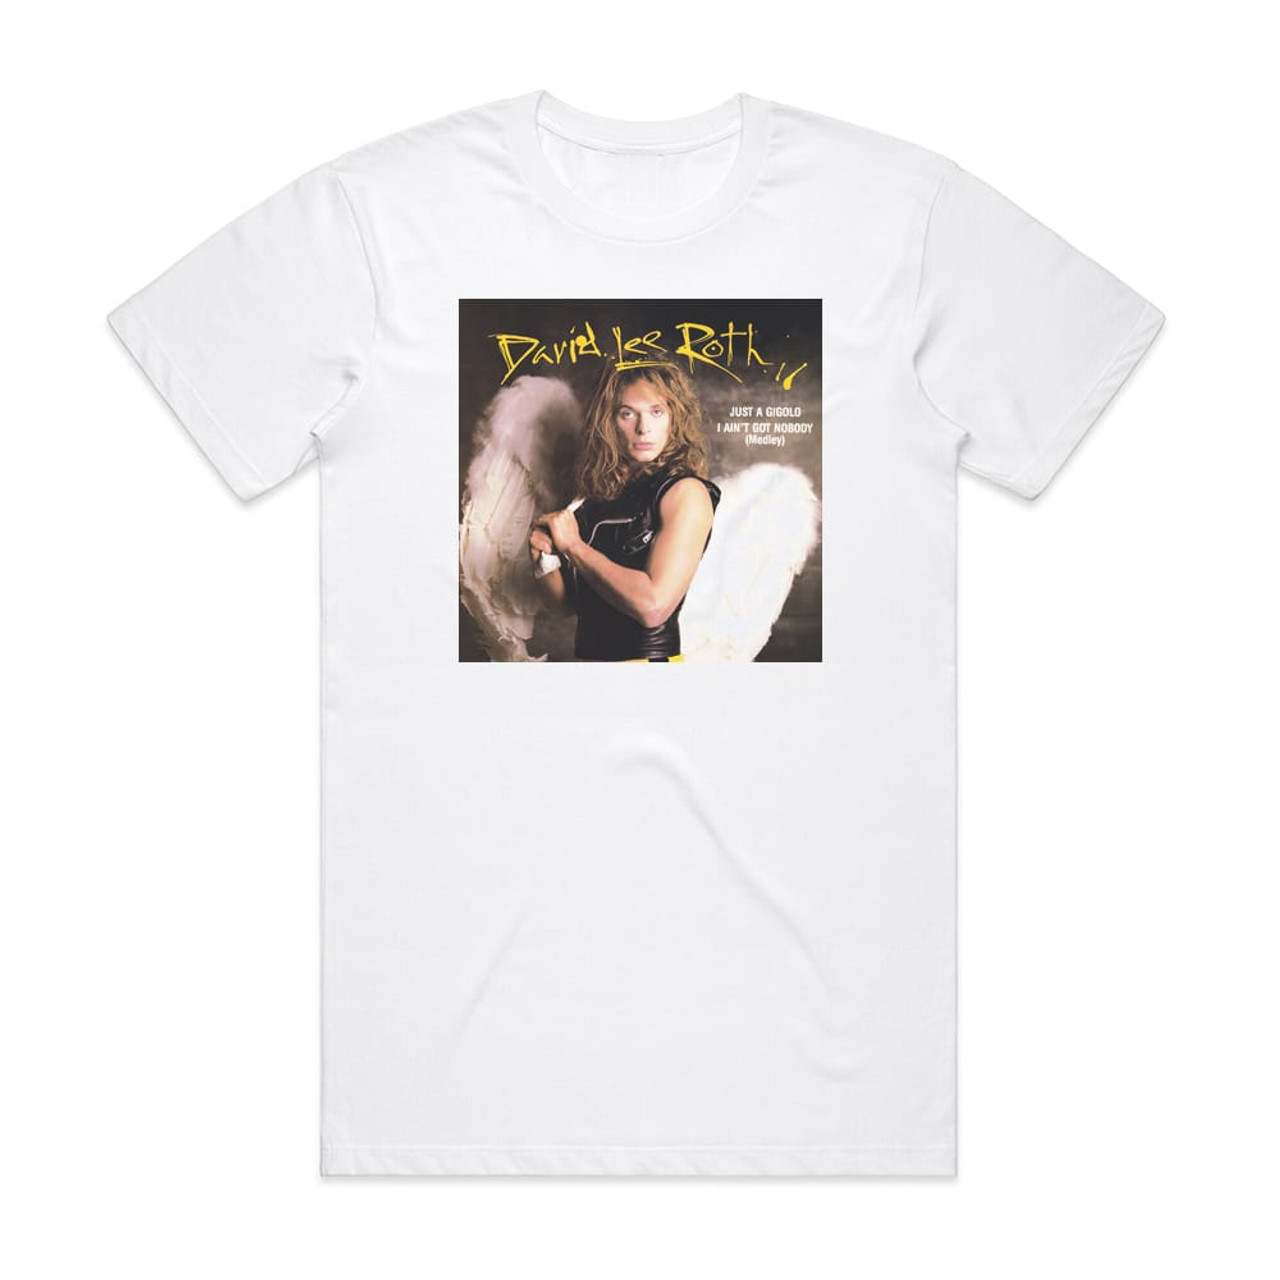 David Lee Roth Just A Gigolo I Aint Got Nobody Medley Album Cover T-Shirt  White